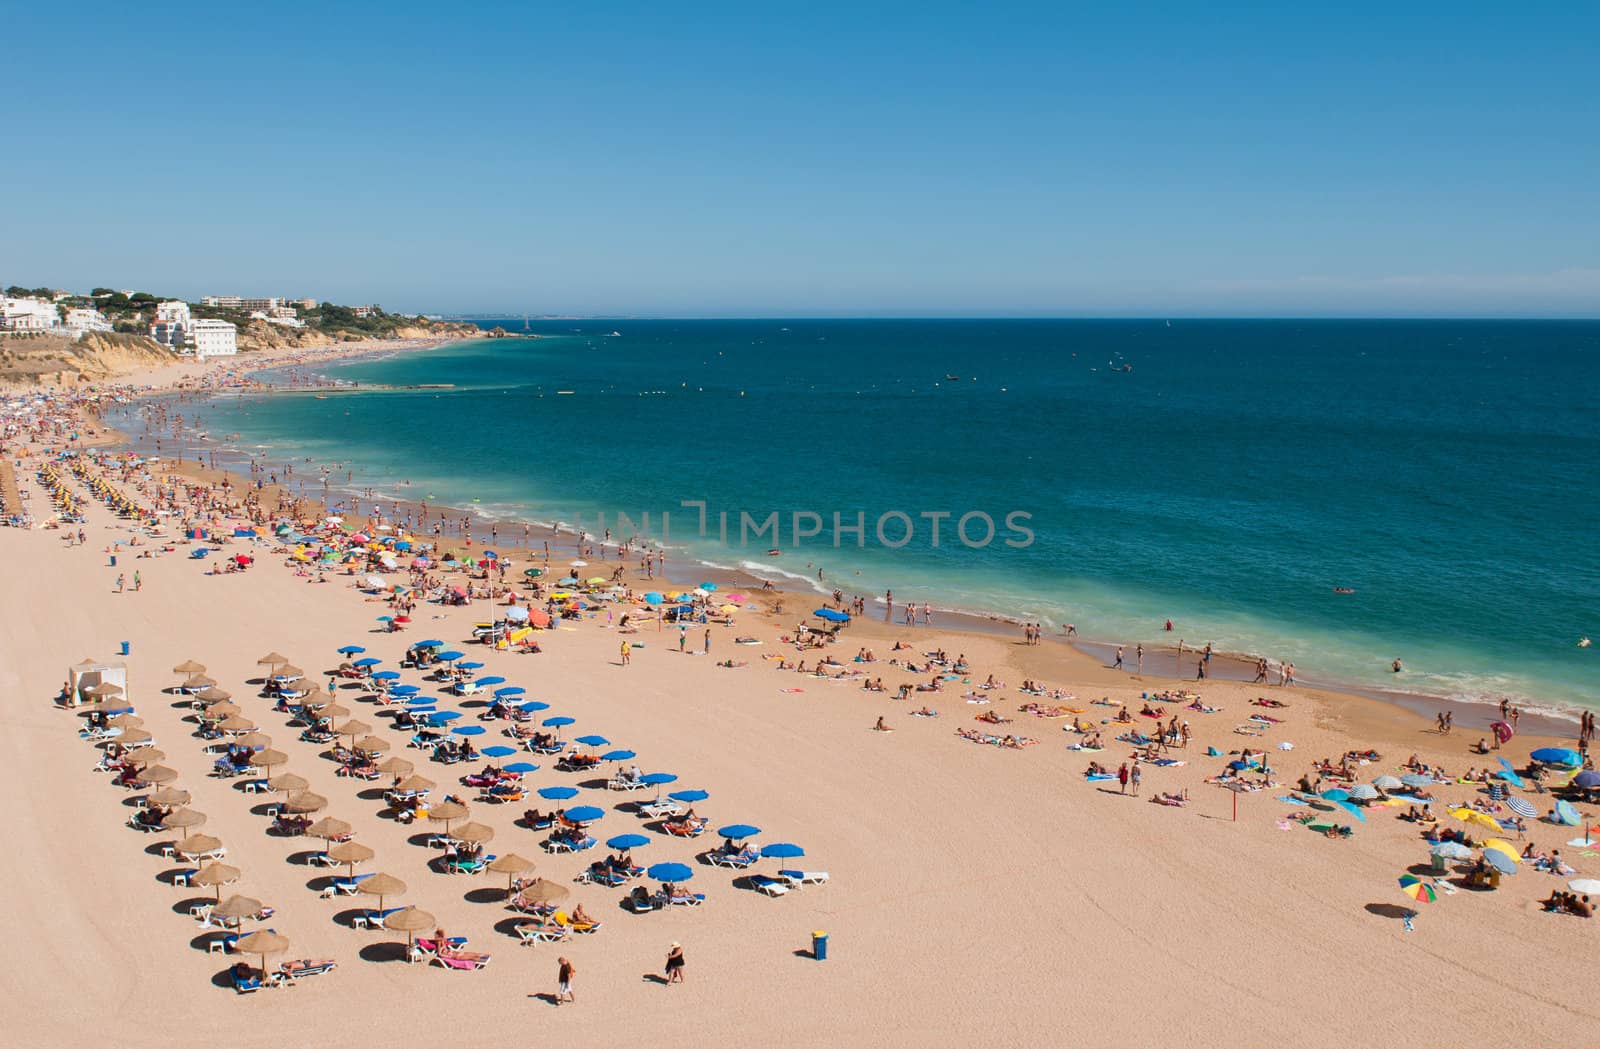 Albufeira beach in Algarve, Portugal